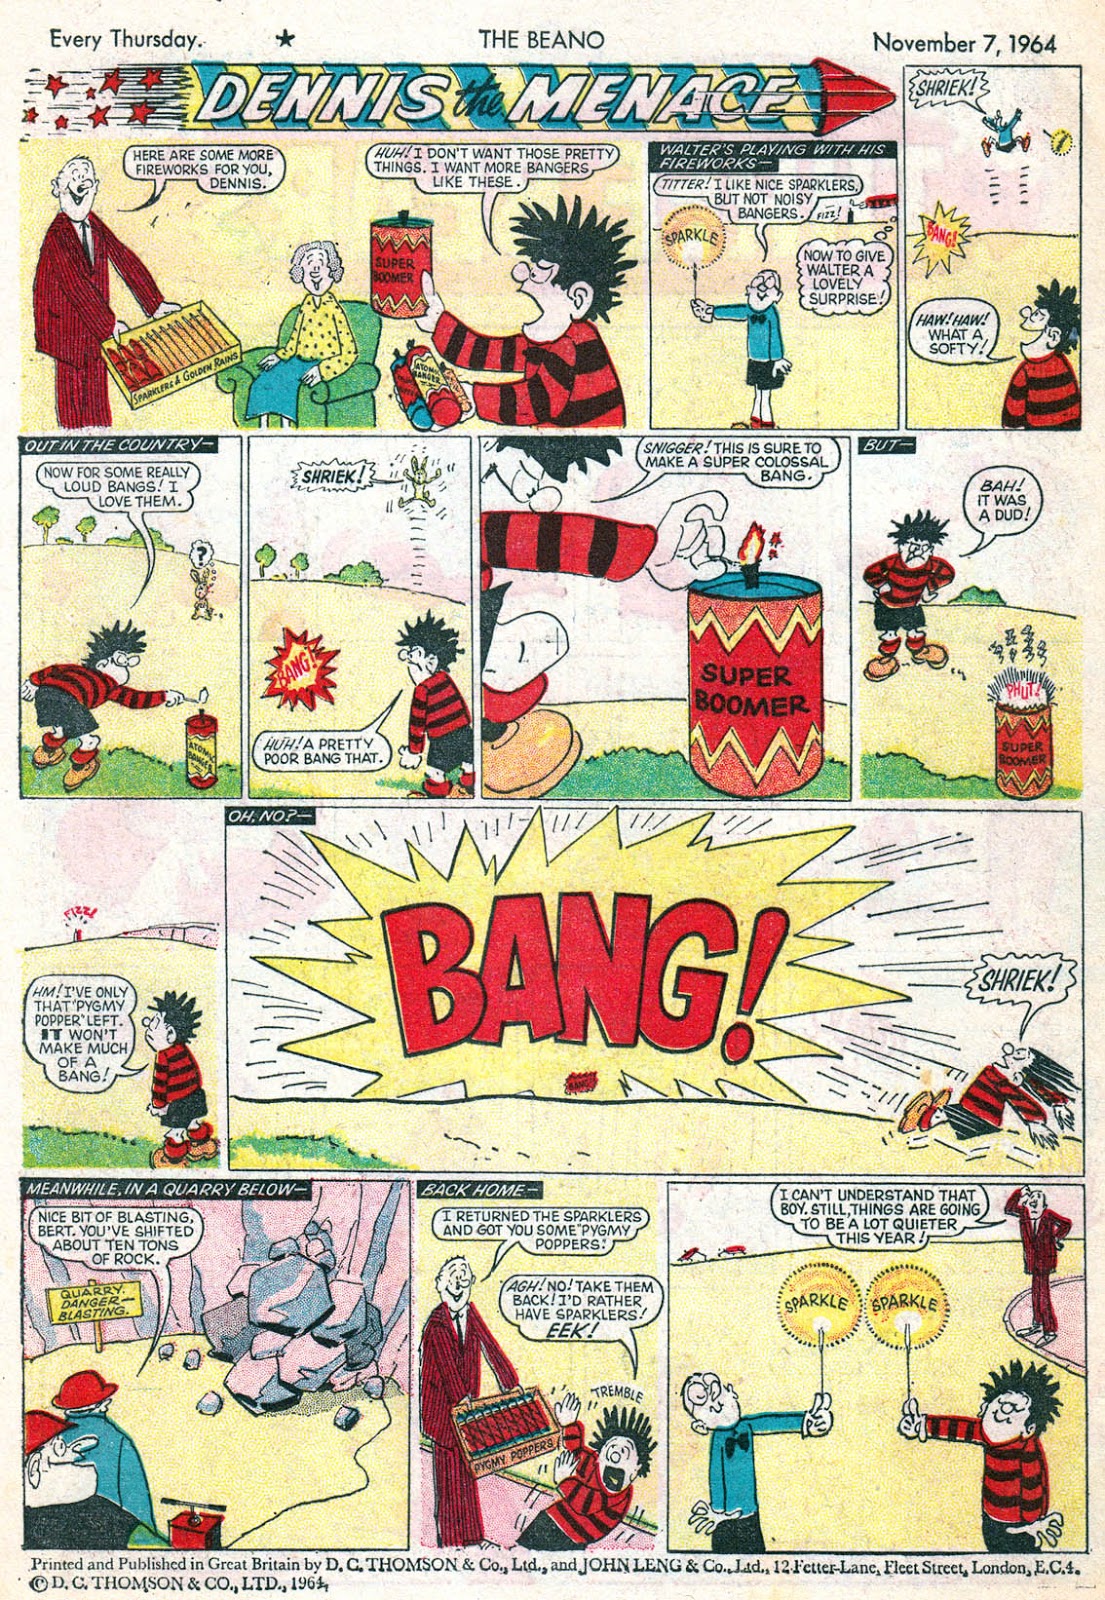 Blimey The Blog Of British Comics Beano Fireworks Fun In 1964